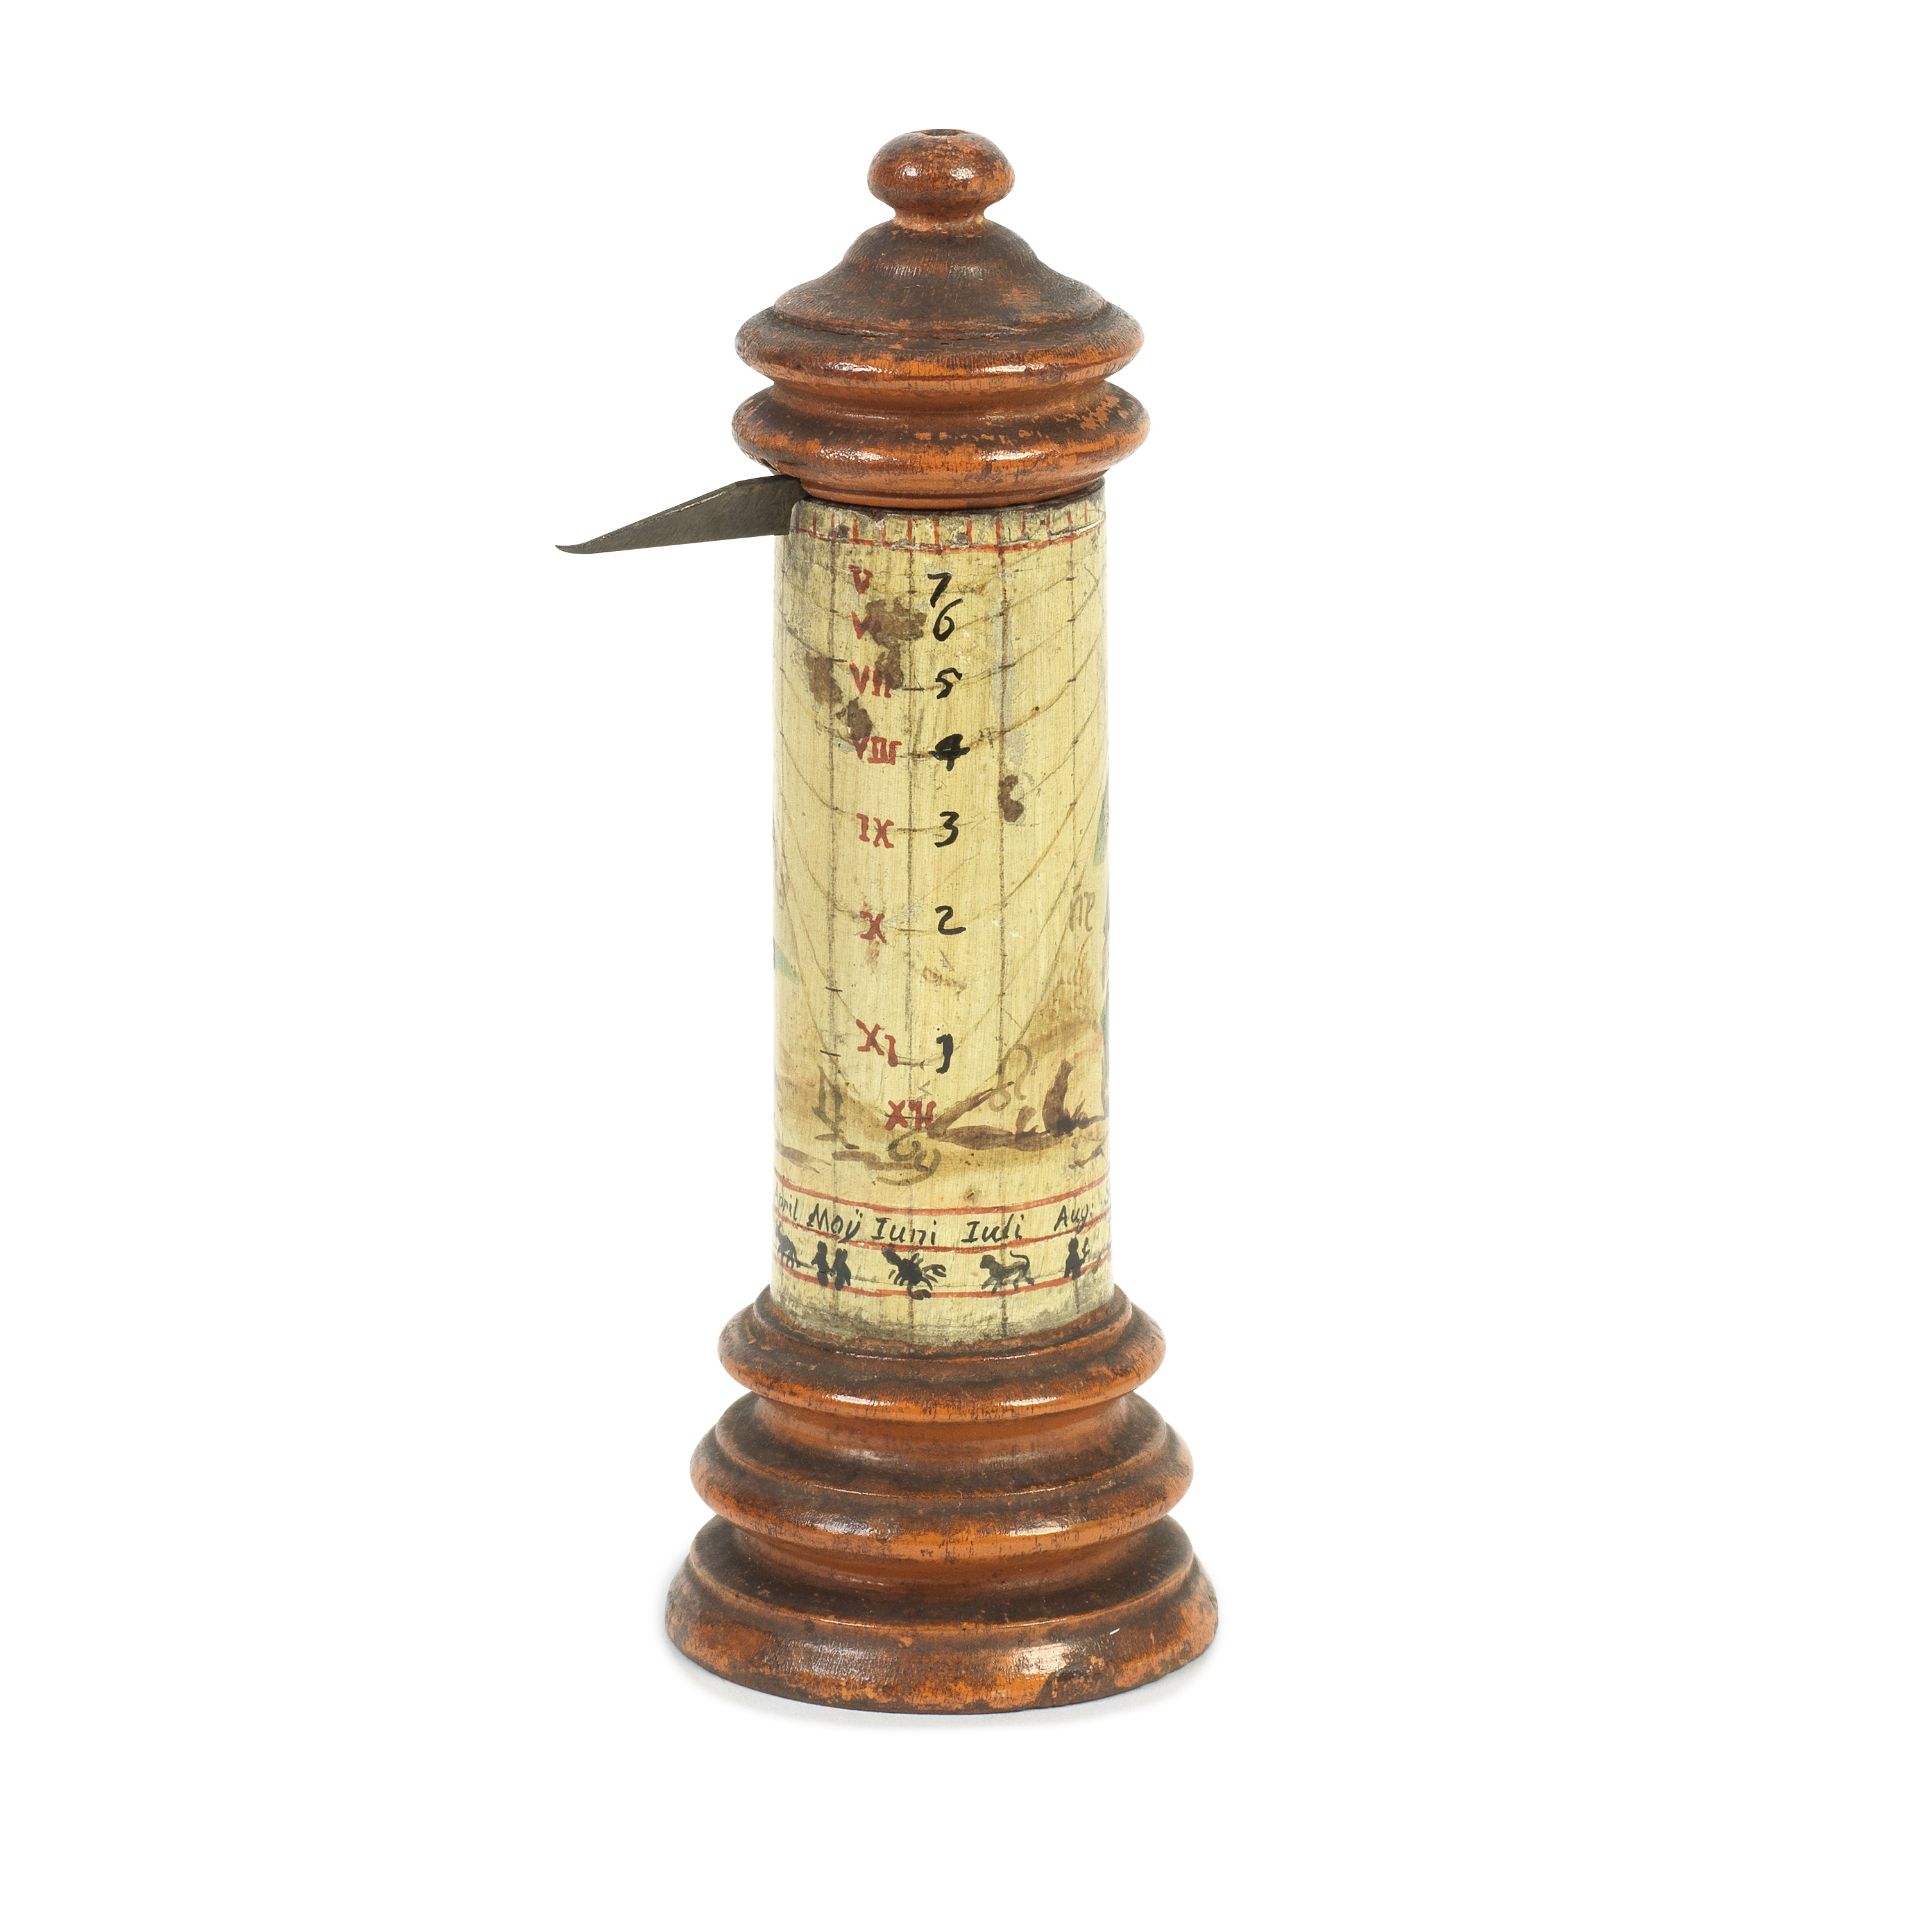 A Gottfried Reiff painted wood pillar dial, Nuremburg, mid-18th century,